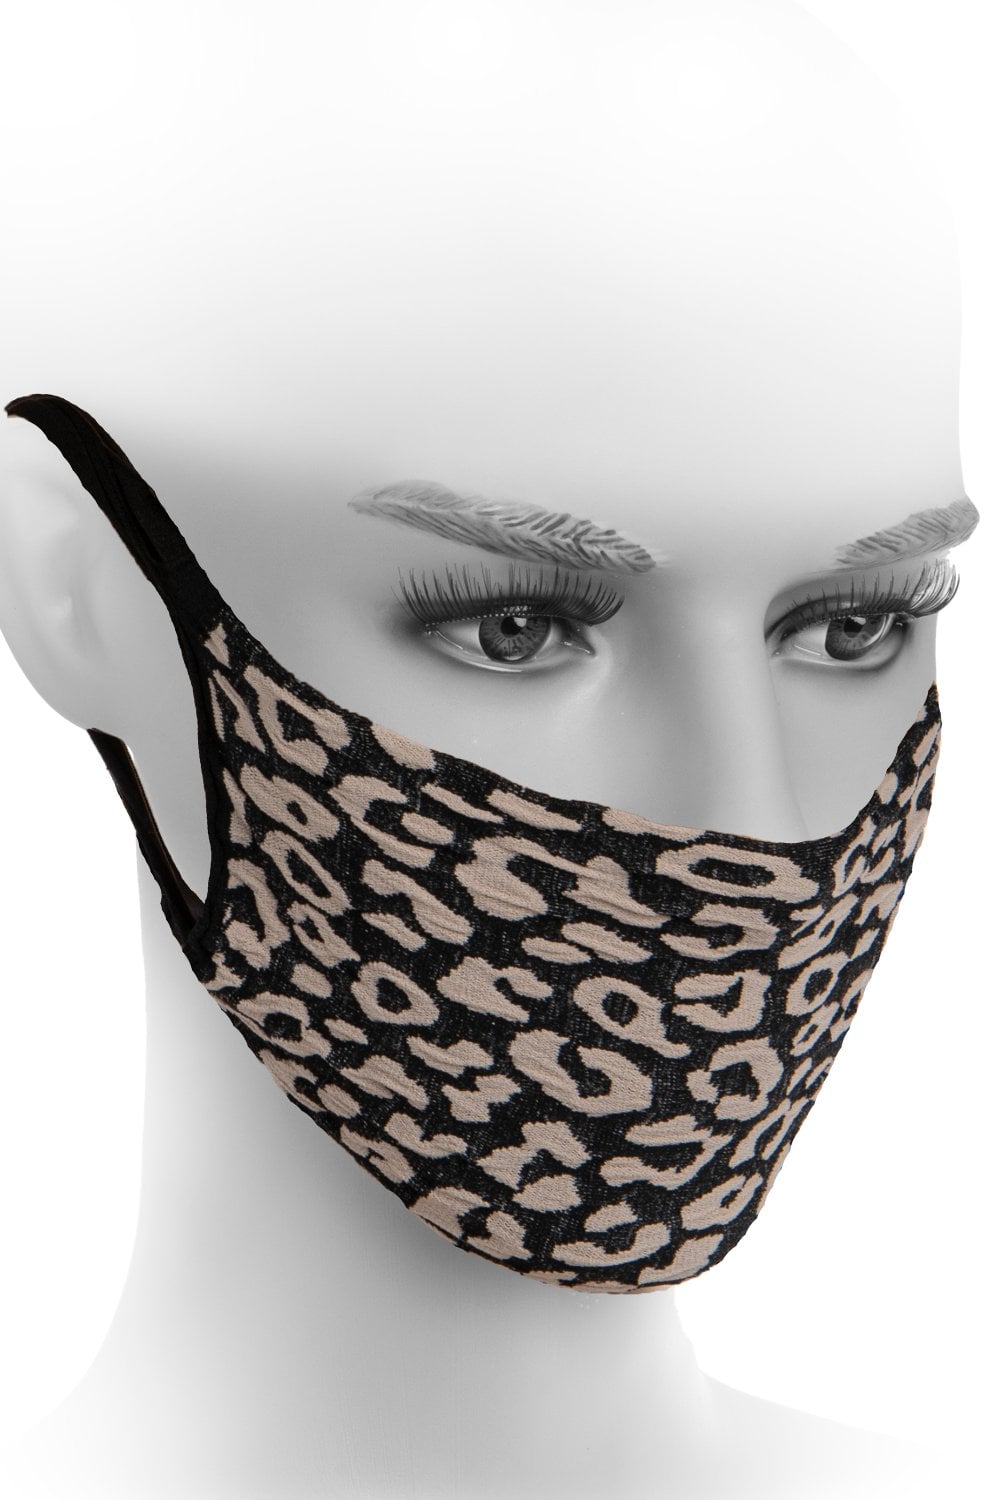 Fiore M0005 Leopard Print Hygiene Mask - black and beige face covering